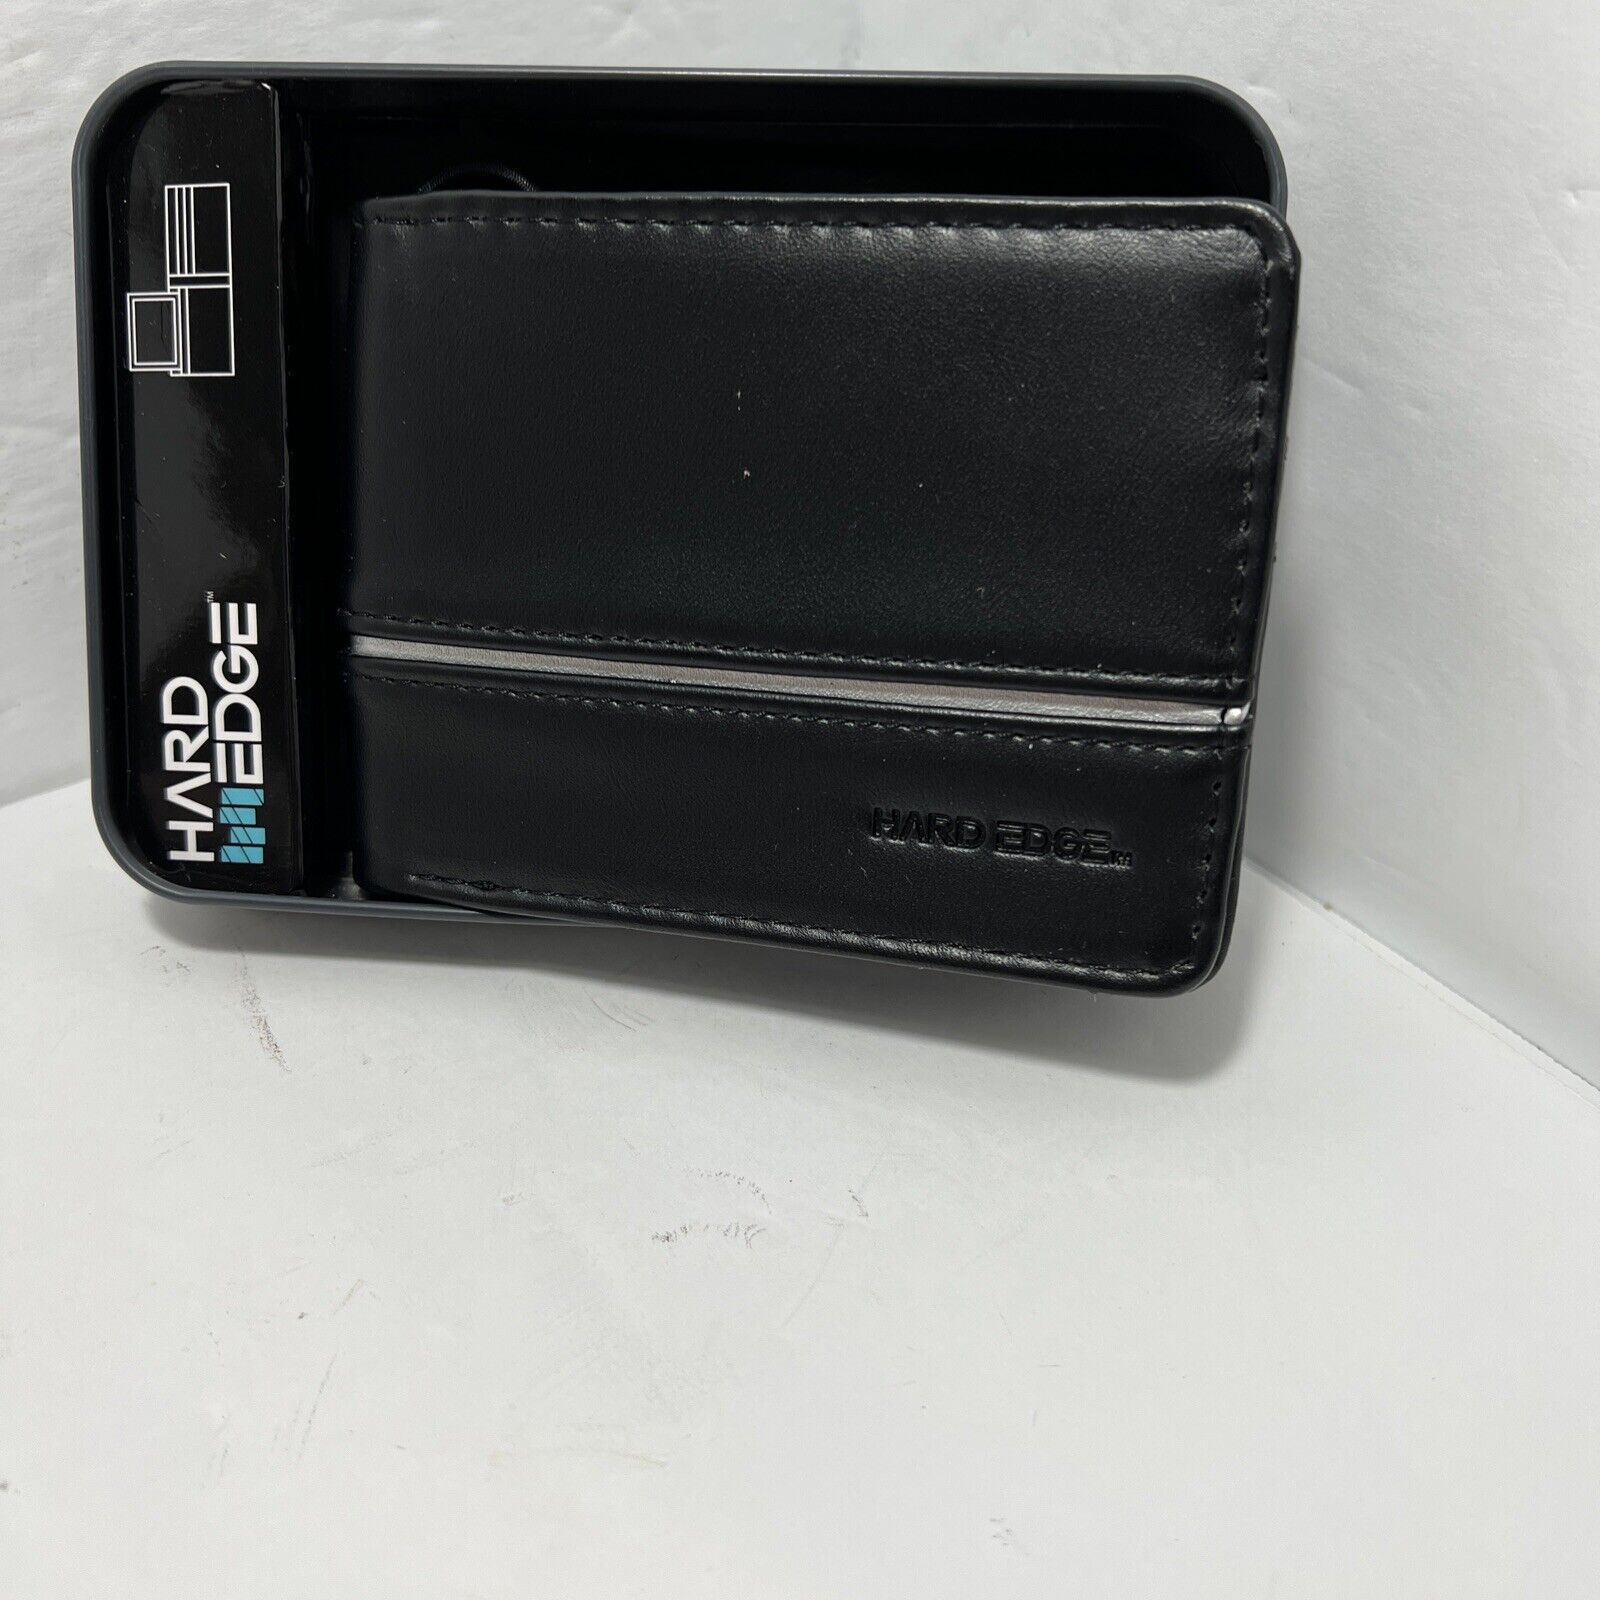 Men's Wallet Hard Edge Original Since 1975) color BLACK New On Box 